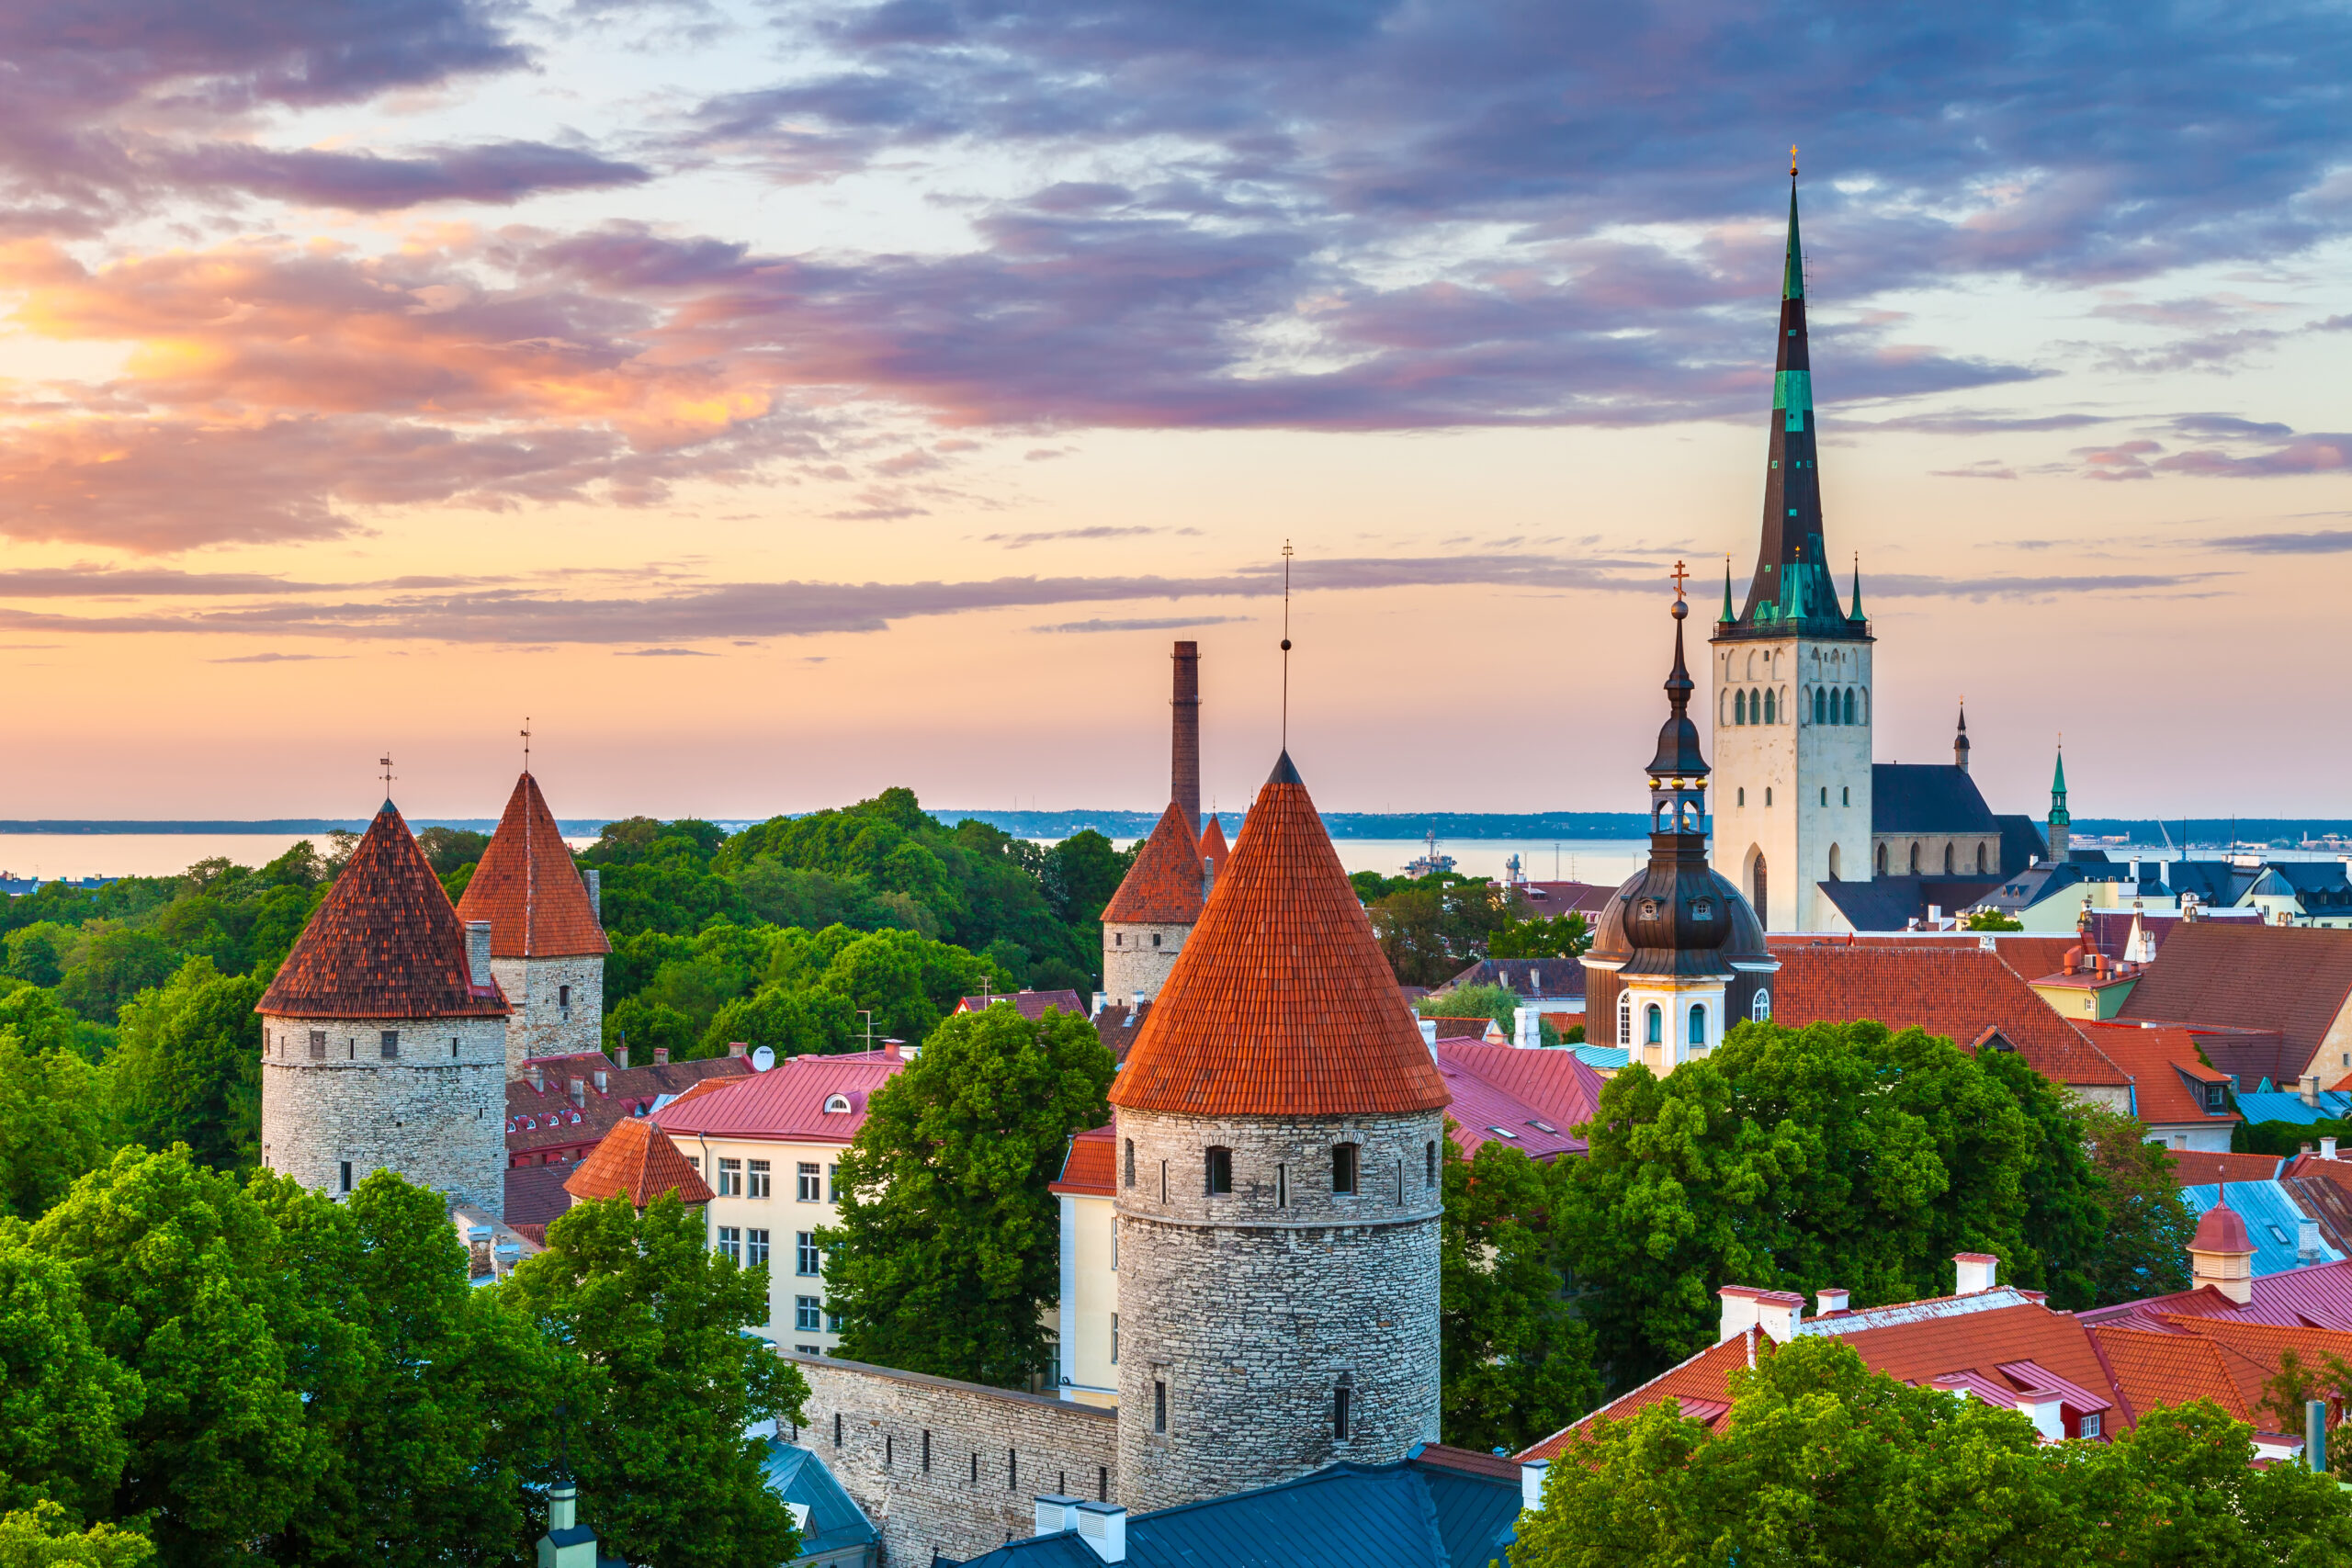 Cityscape of old town at sundown in Estonia.